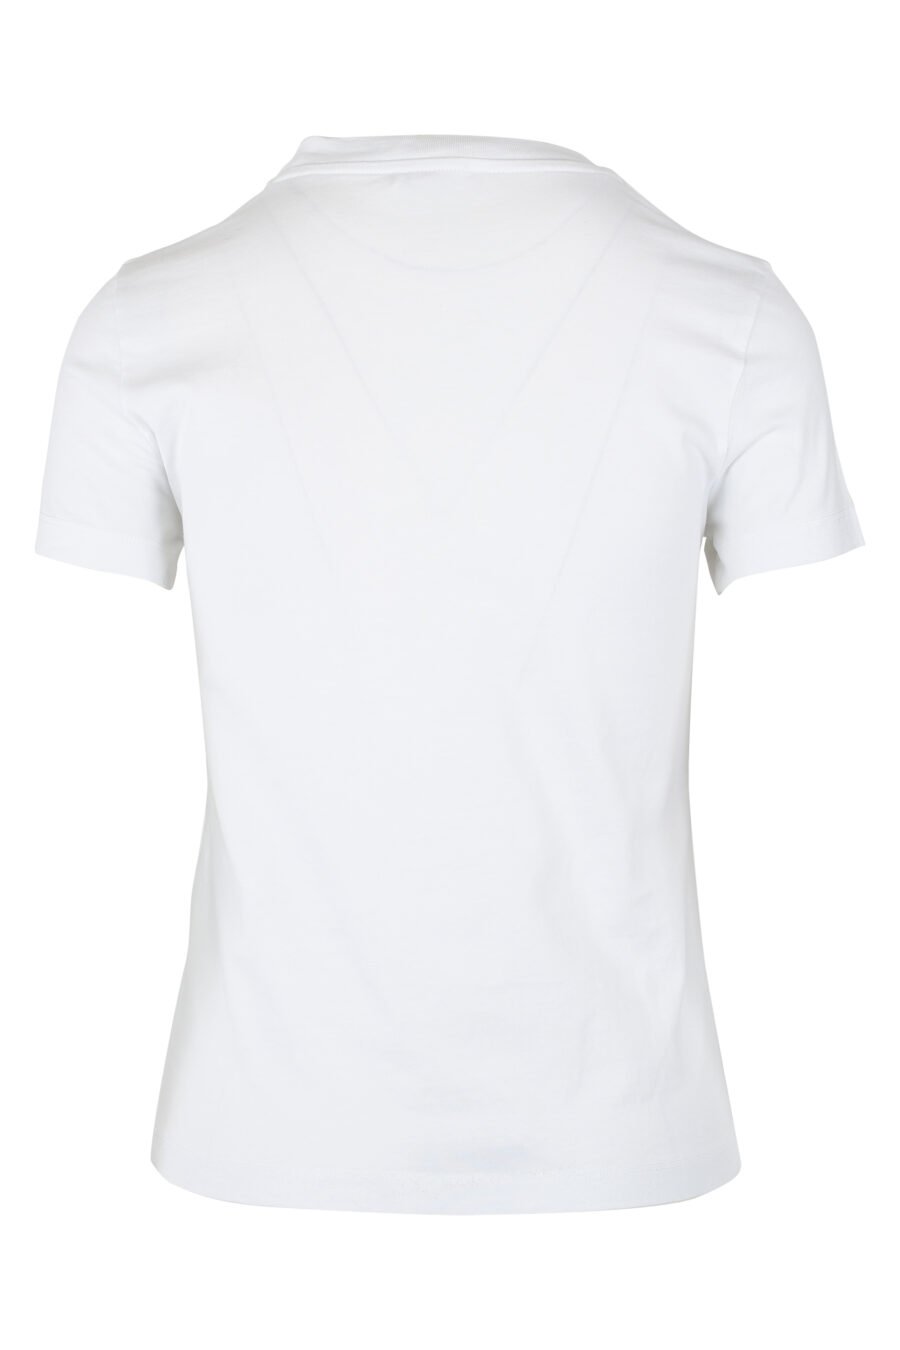 Weißes T-Shirt mit rotem Minilogue - IMG 9525